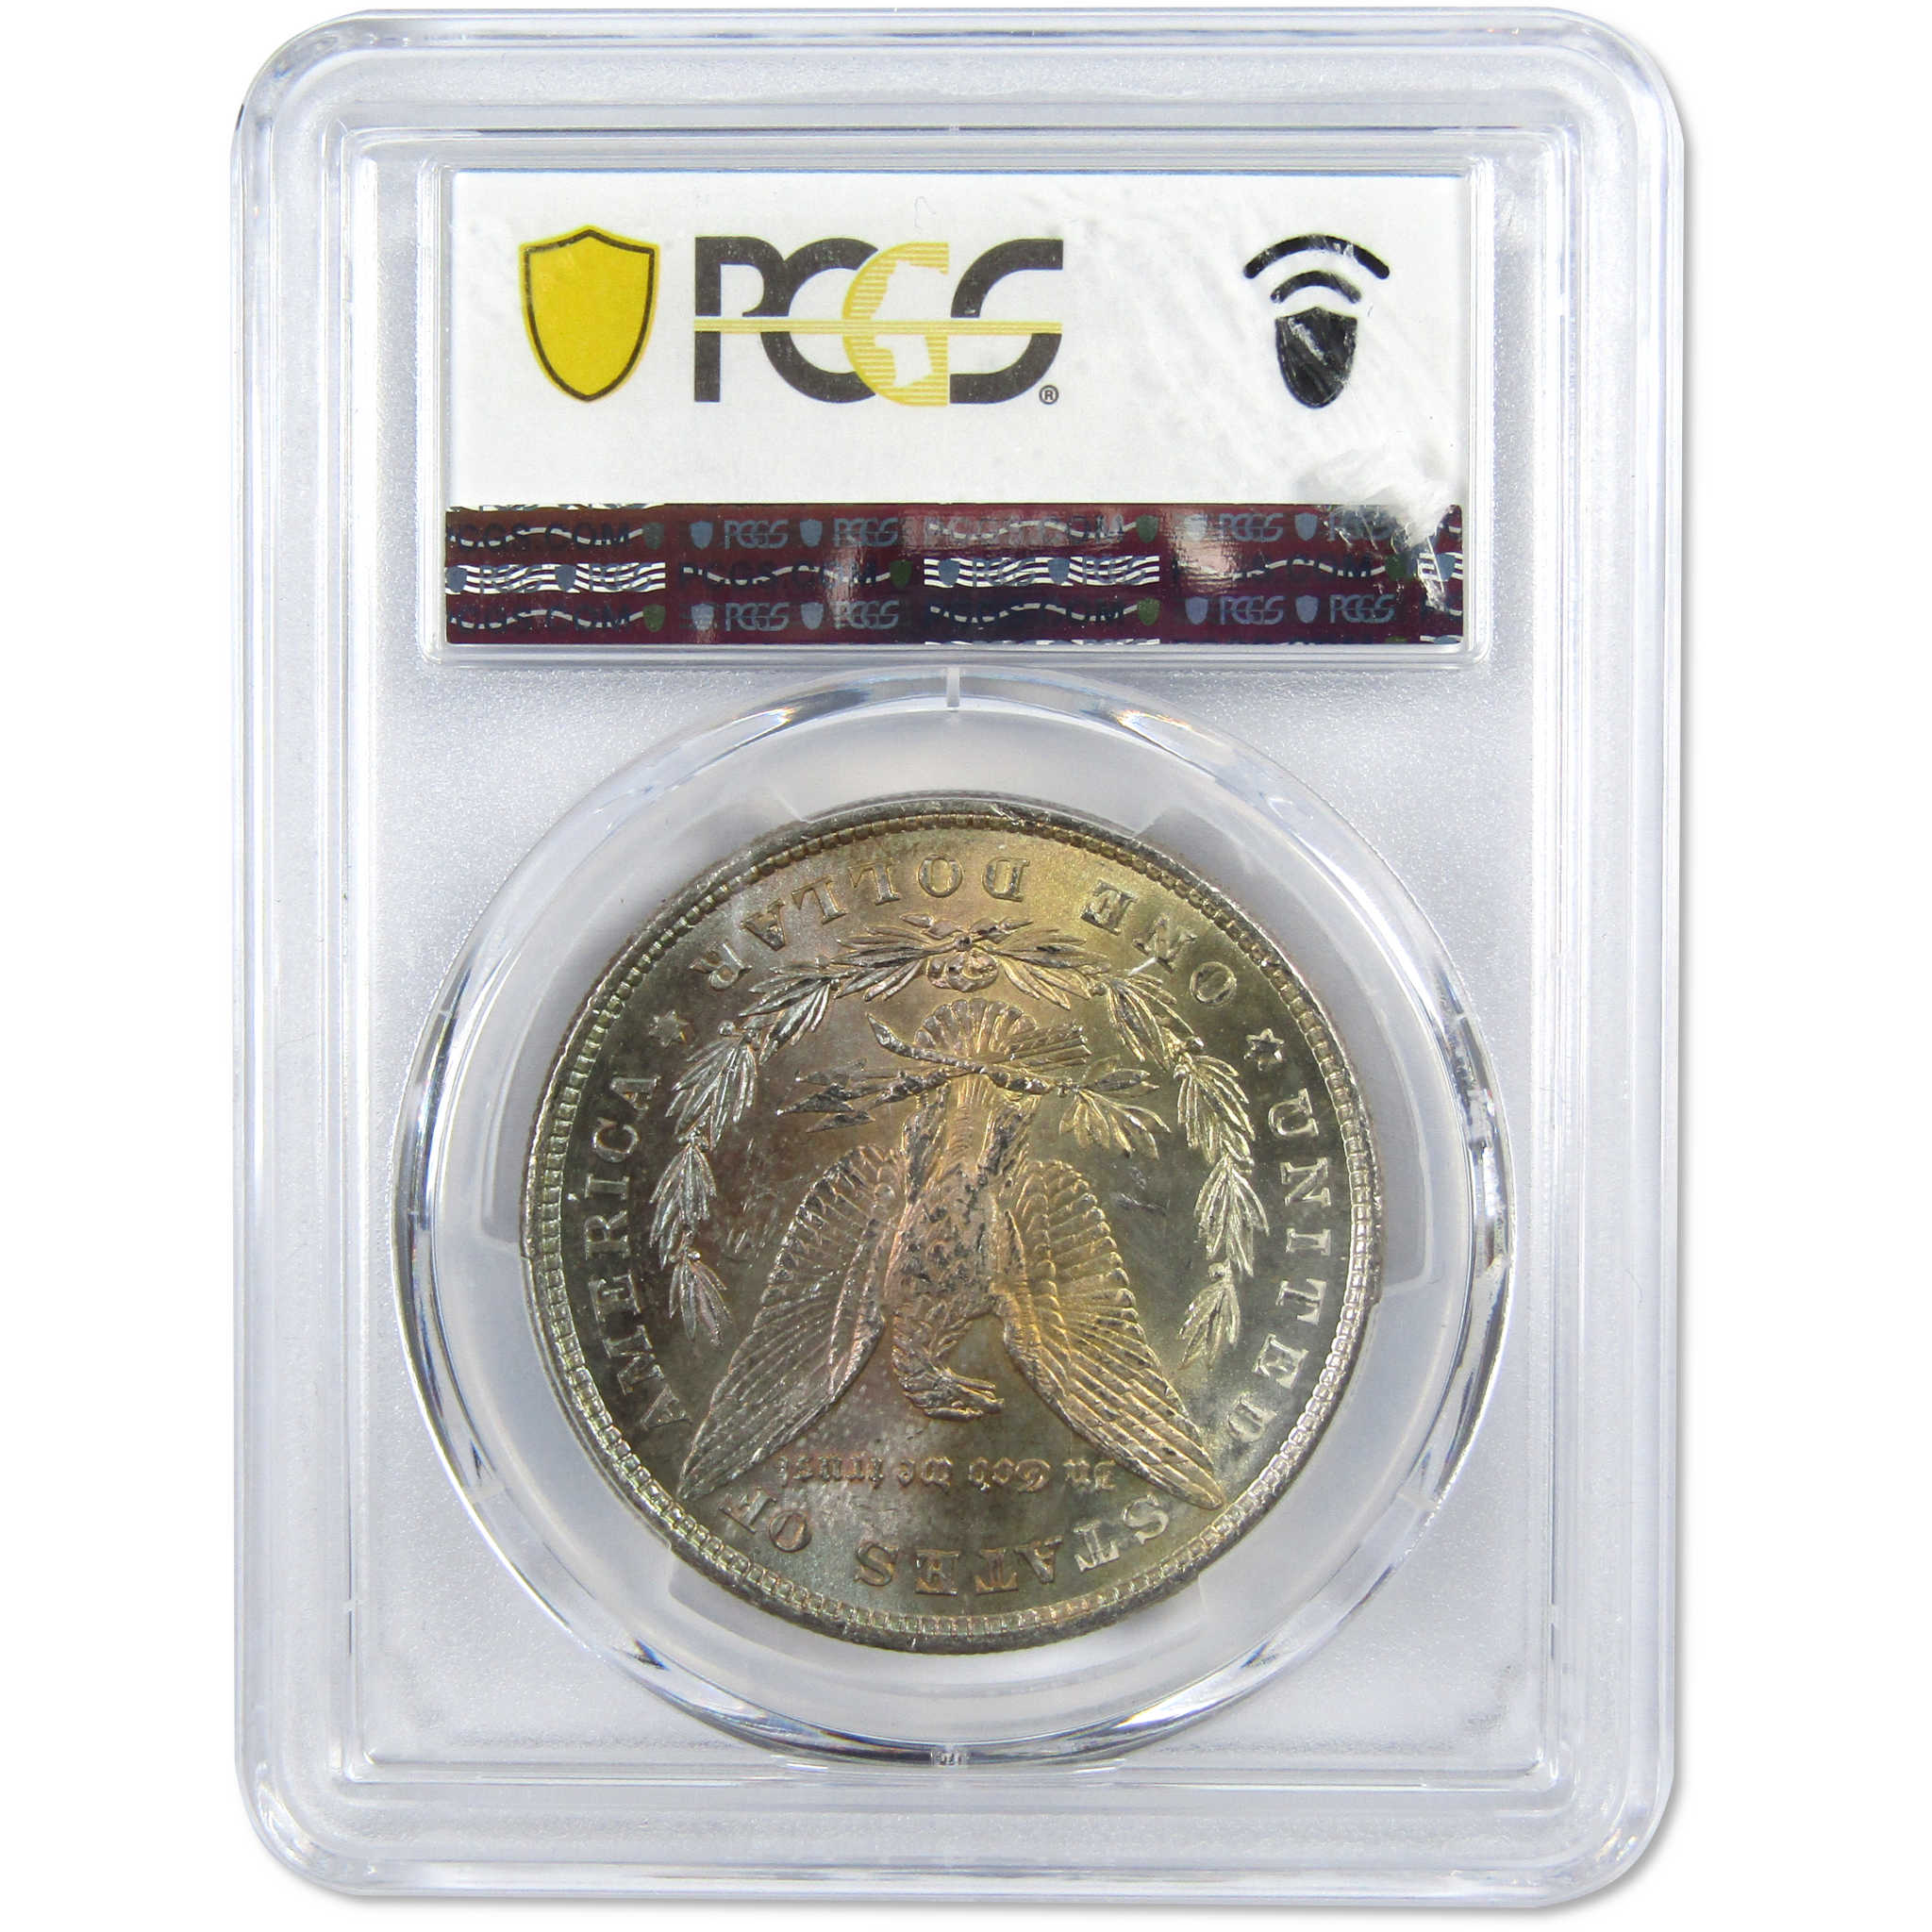 1878 8TF Morgan Dollar MS 62 PCGS 90% Silver $1 Coin Toned SKU:I5905